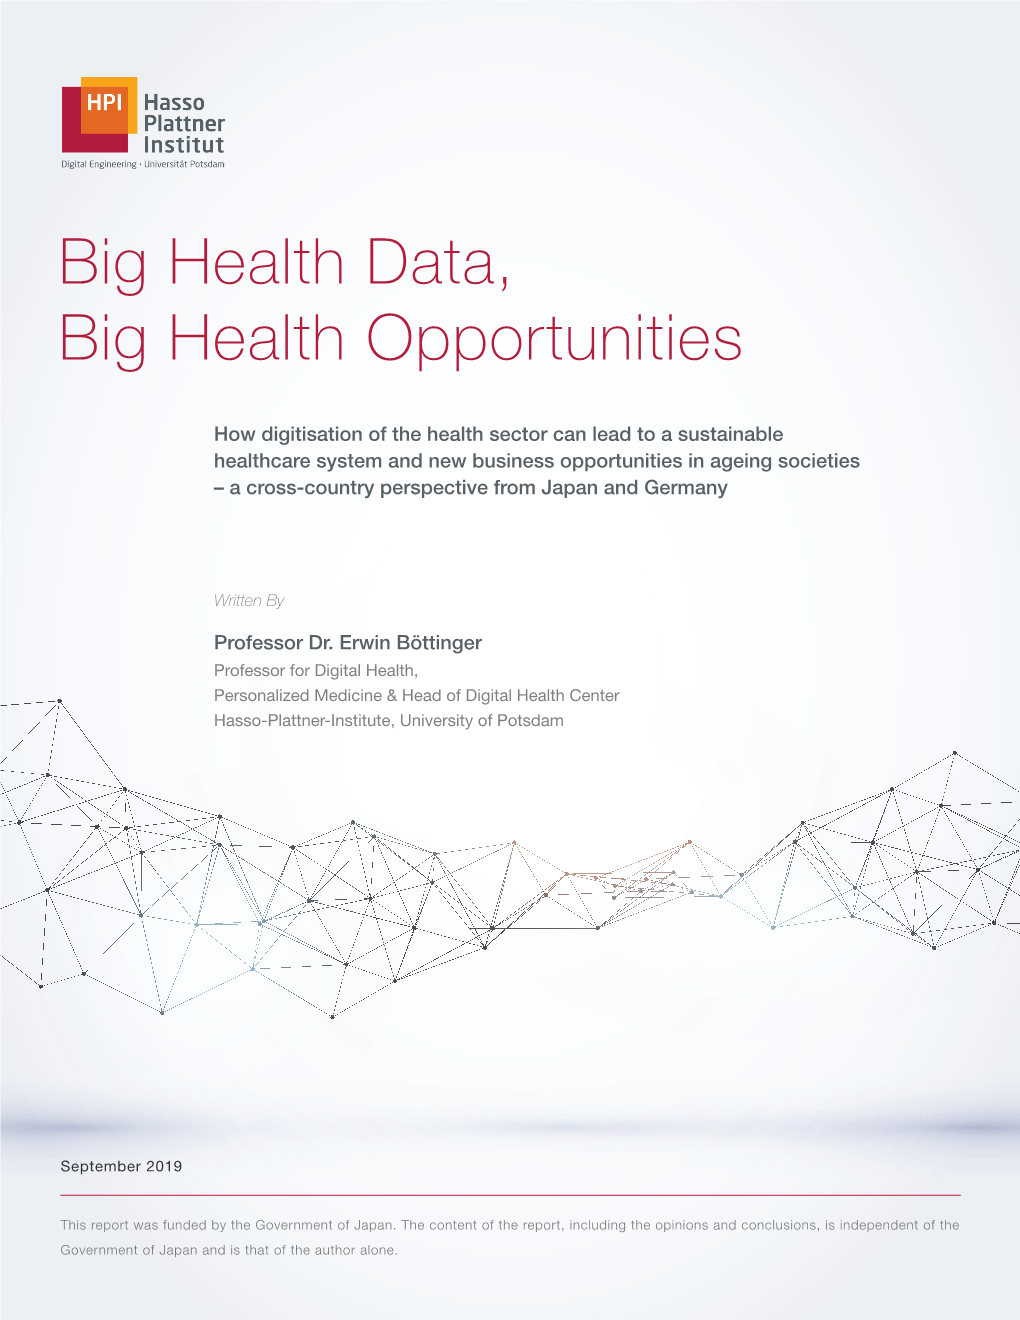 Big Health Data, Big Health Opportunities